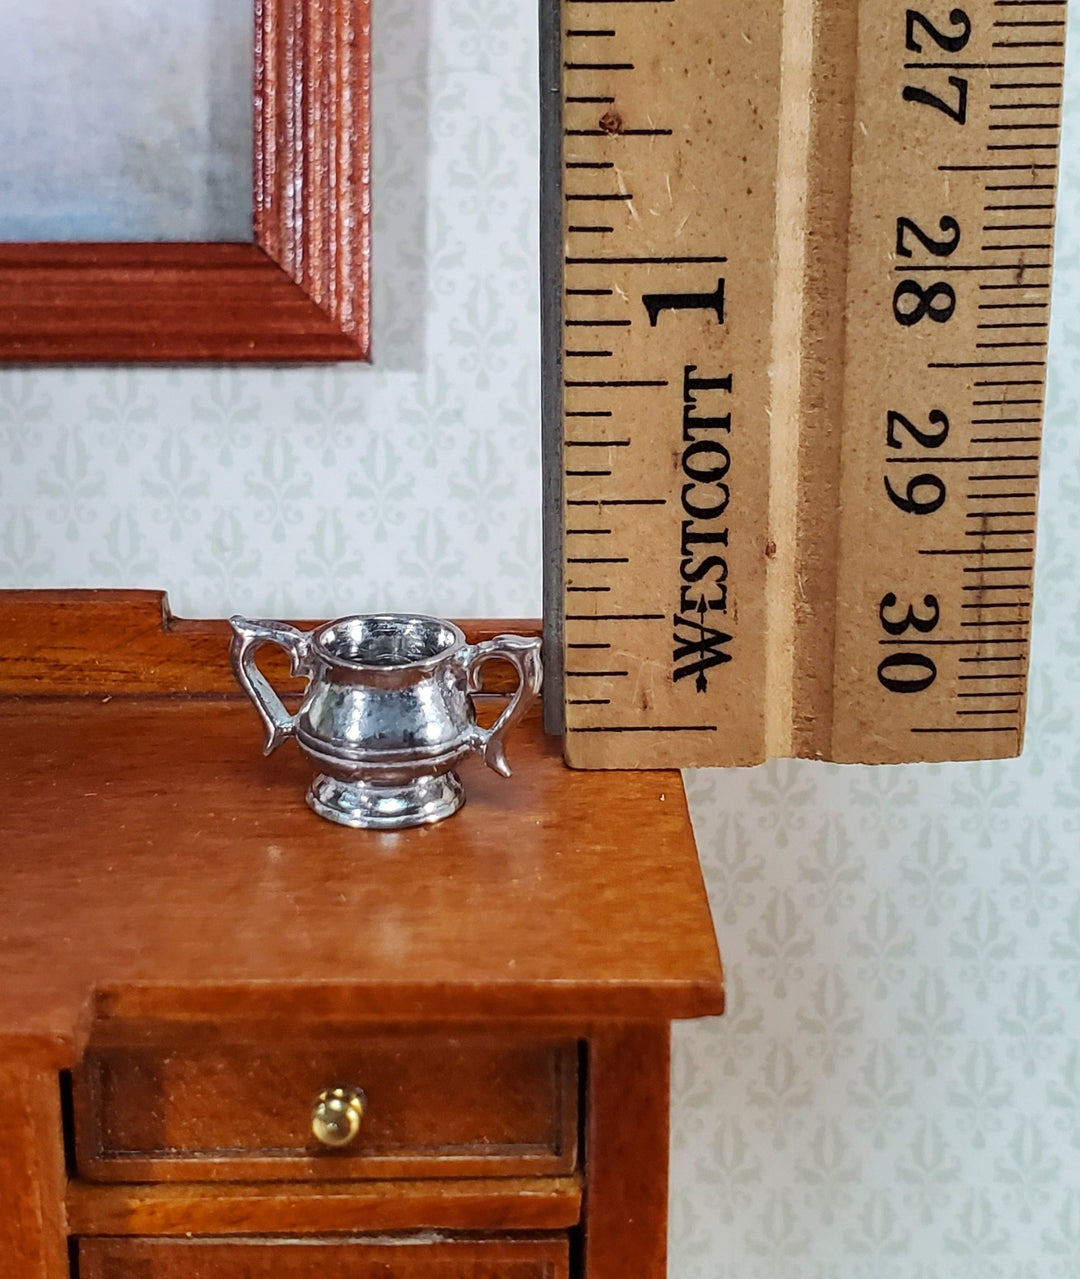 Dollhouse Small Sugar Bowl Polished Metal 1:12 Scale Miniature by Phoenix Model - Miniature Crush